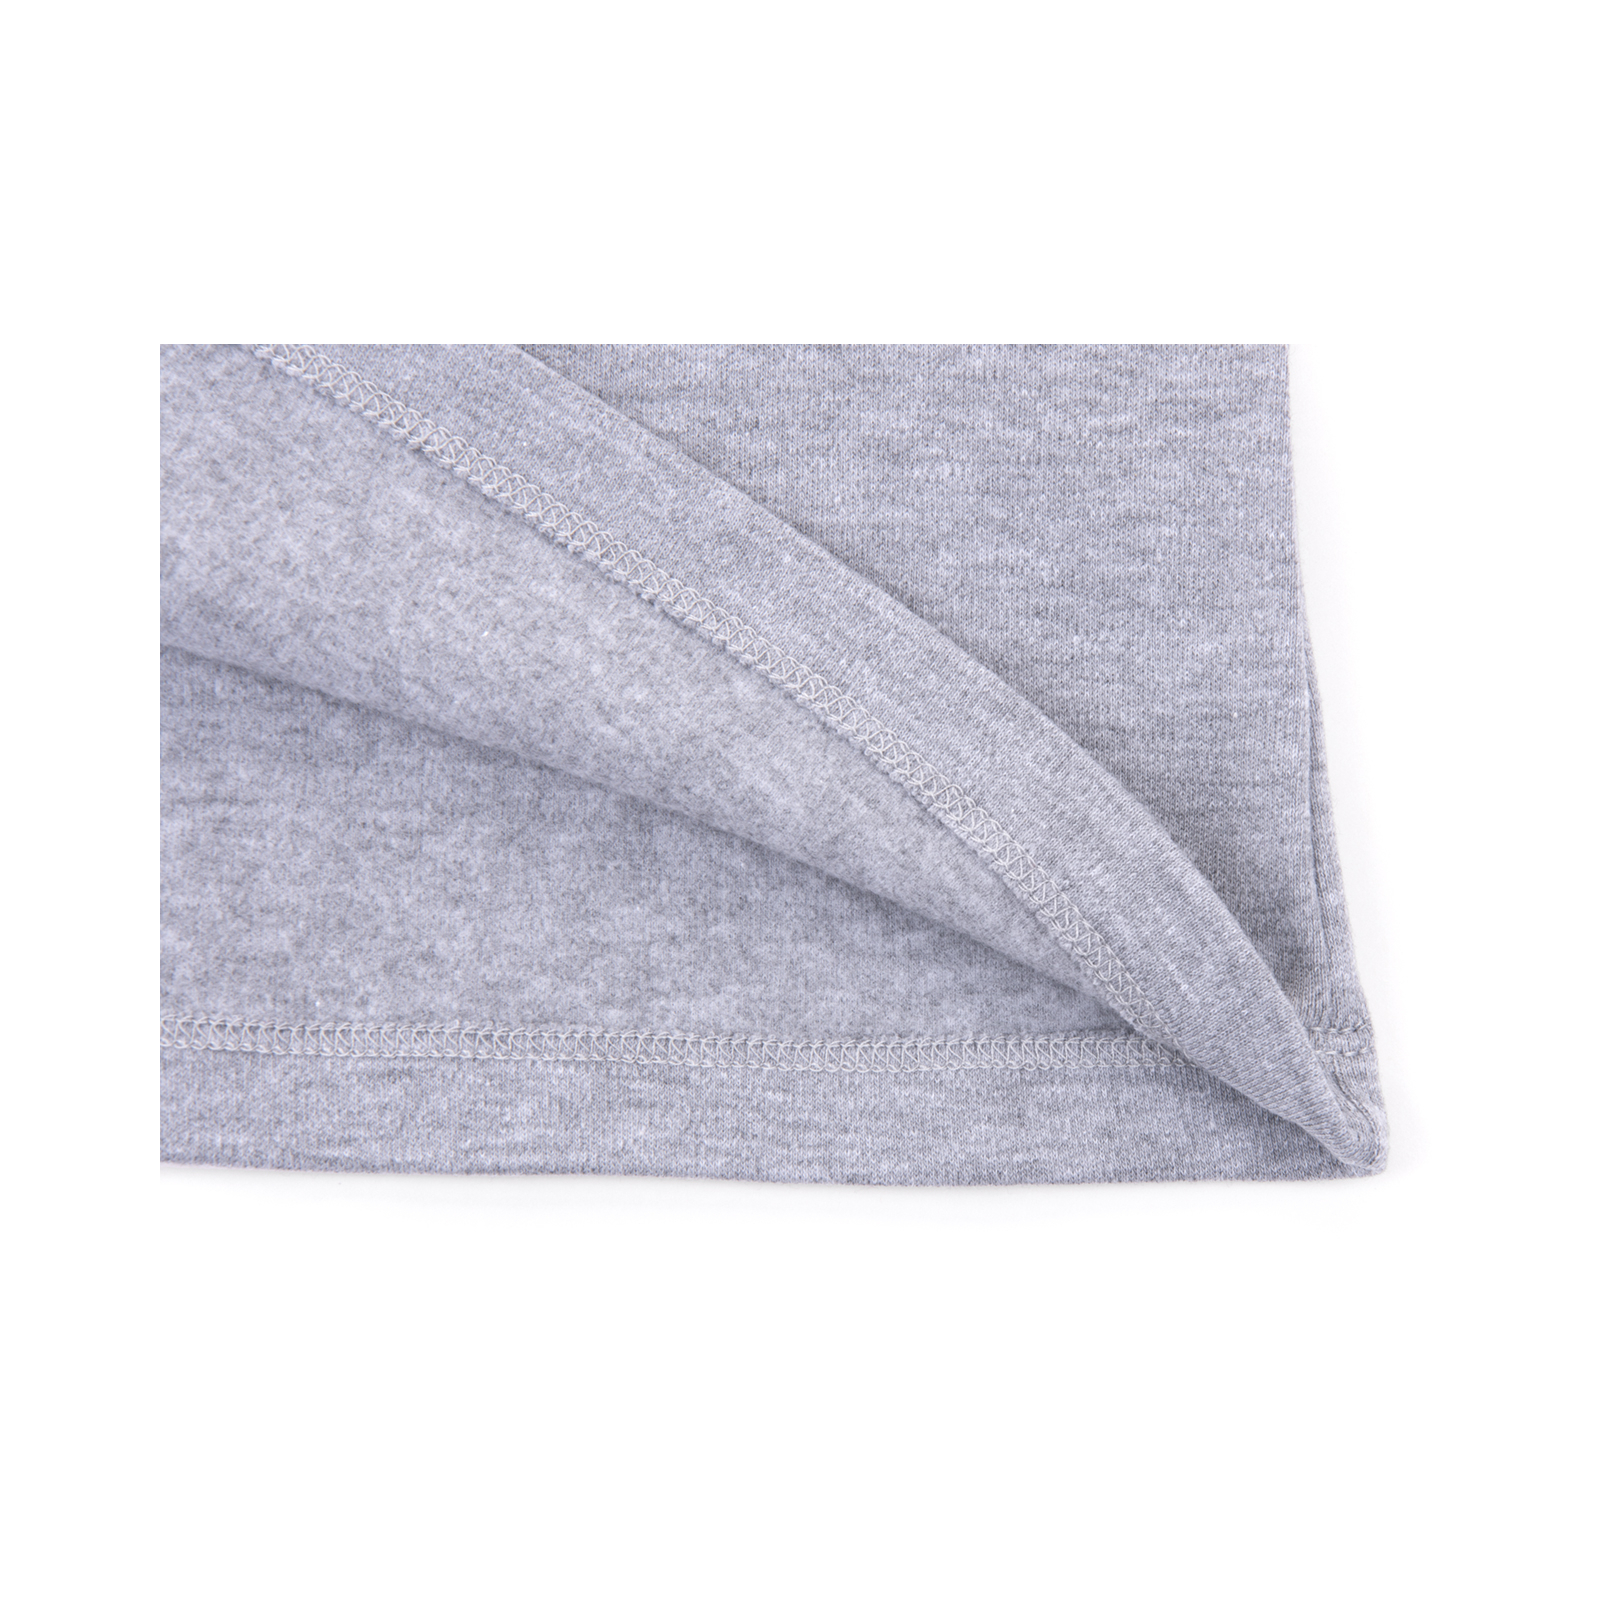 Кофта Lovetti водолазка серая меланжевая (1013-140-gray) изображение 5